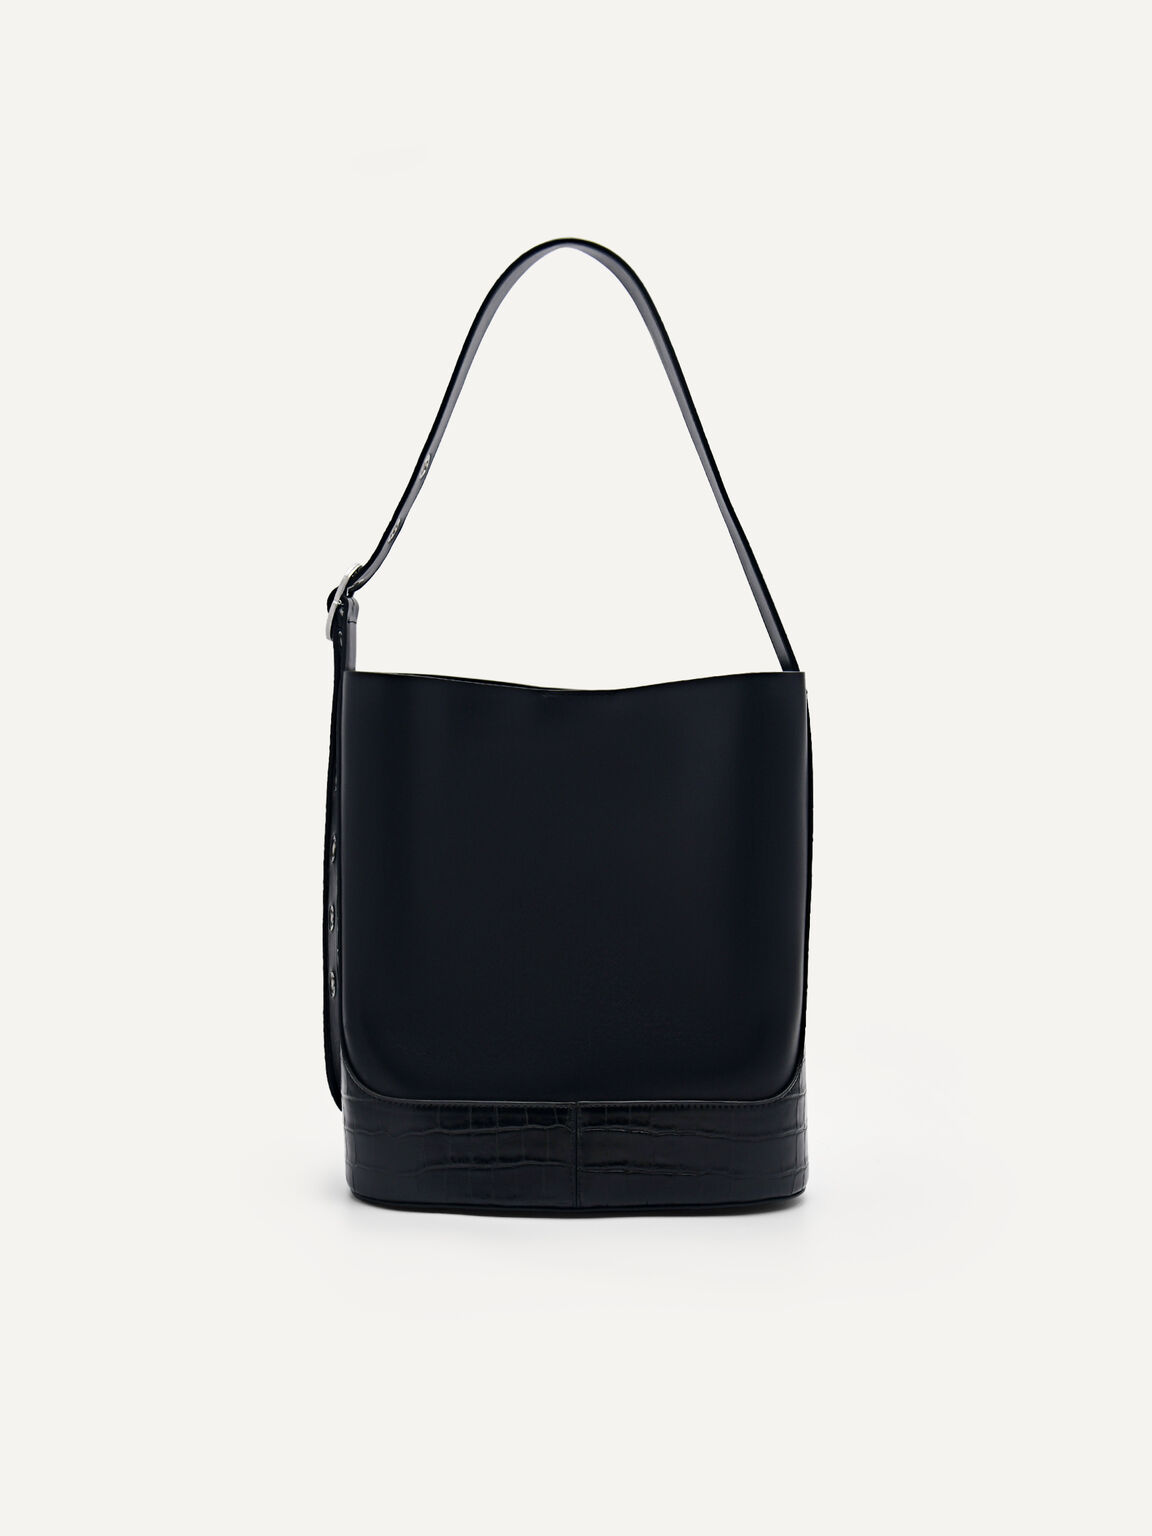 Olive Hobo Bag, Black